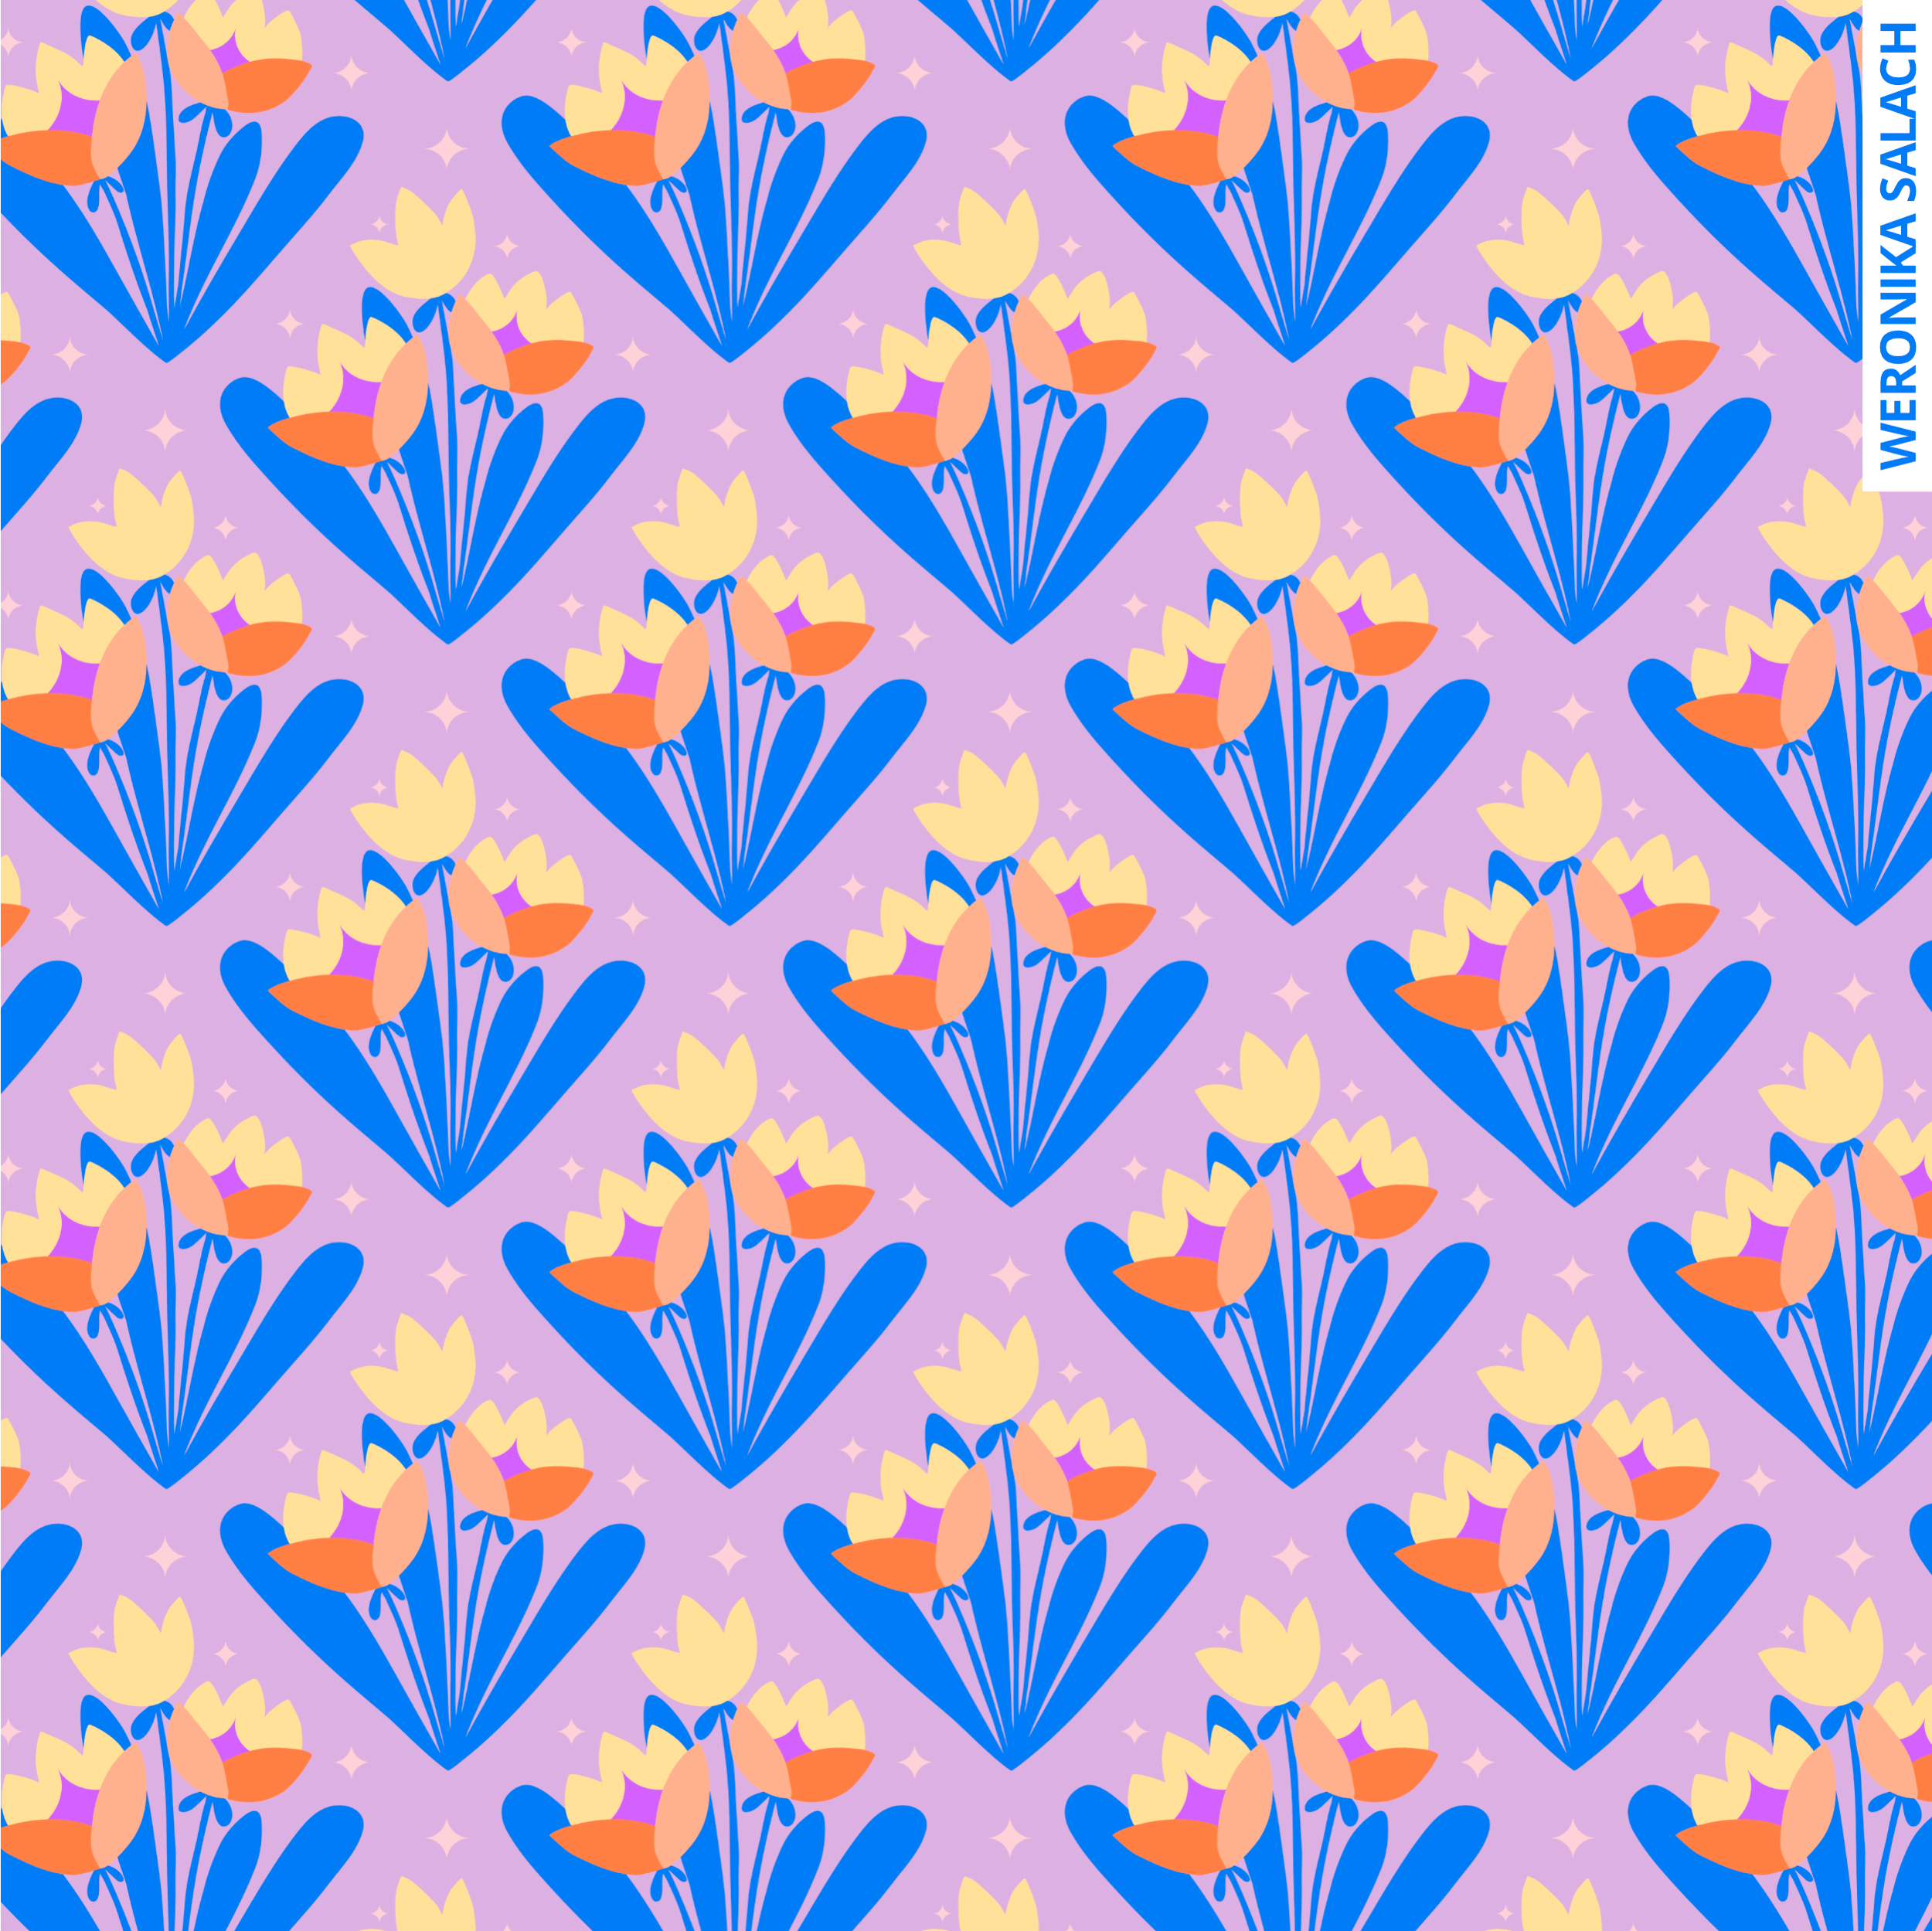 WS_repeat pattern_diamond repeat geometric florals_3.png